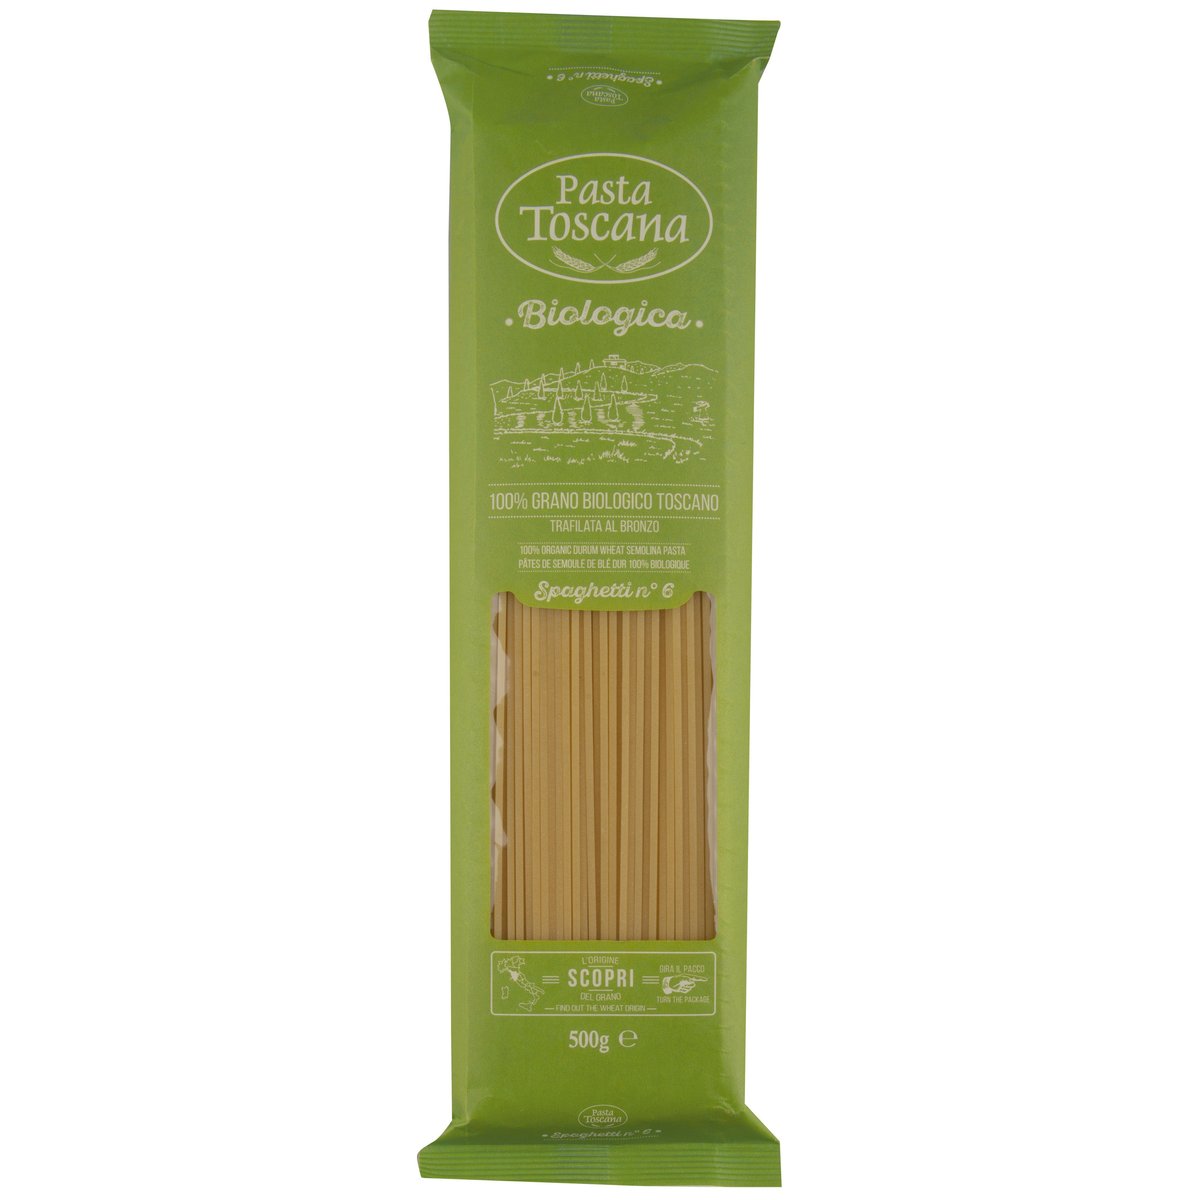 Pasta Toscana BIO Spaghetti n°6 biologica